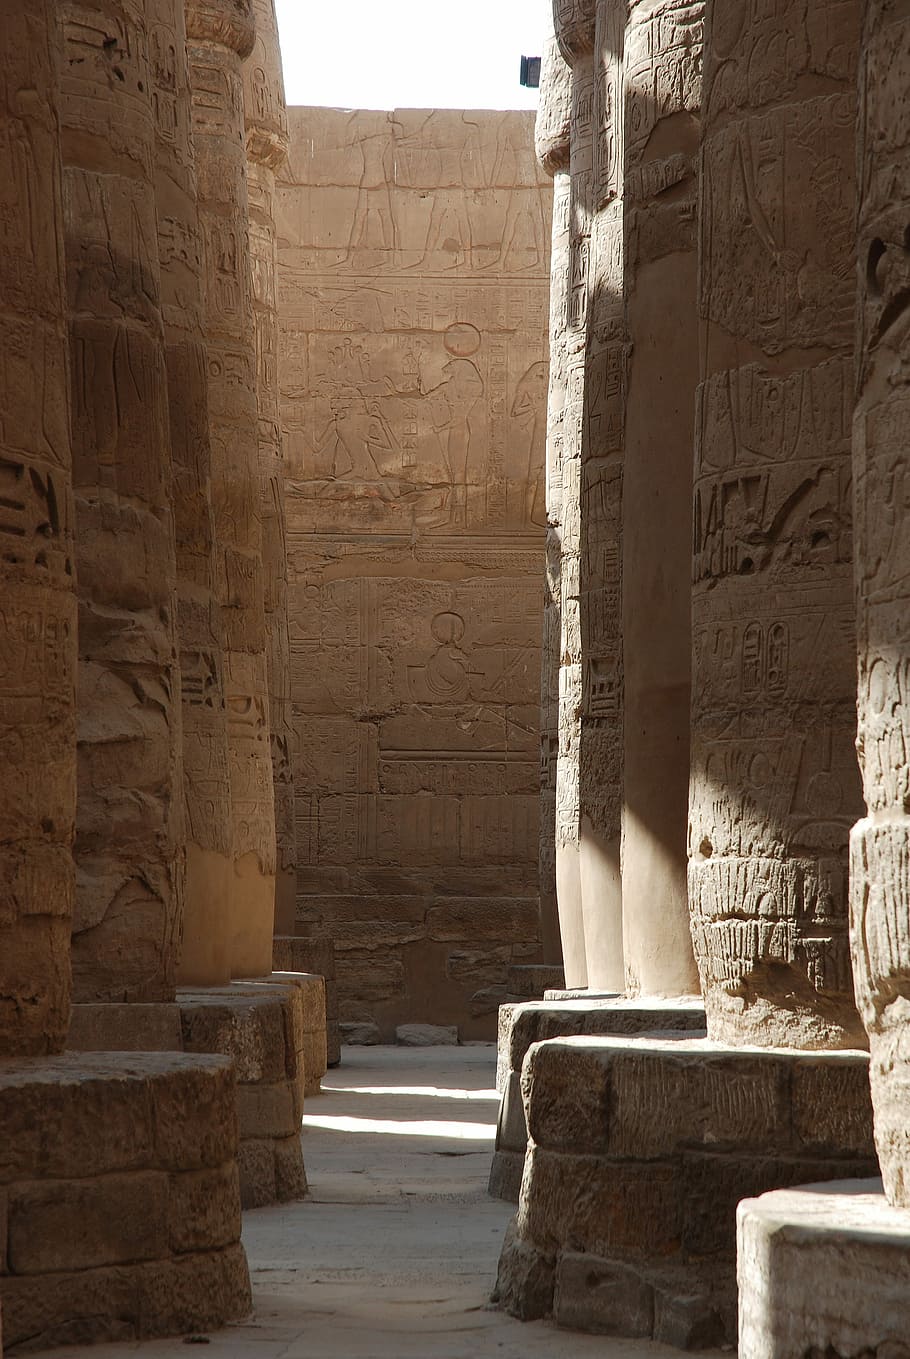 Egypt, Ancient, Archeology, Luxor, karnak, temple, monuments, columns, historical, sculpture